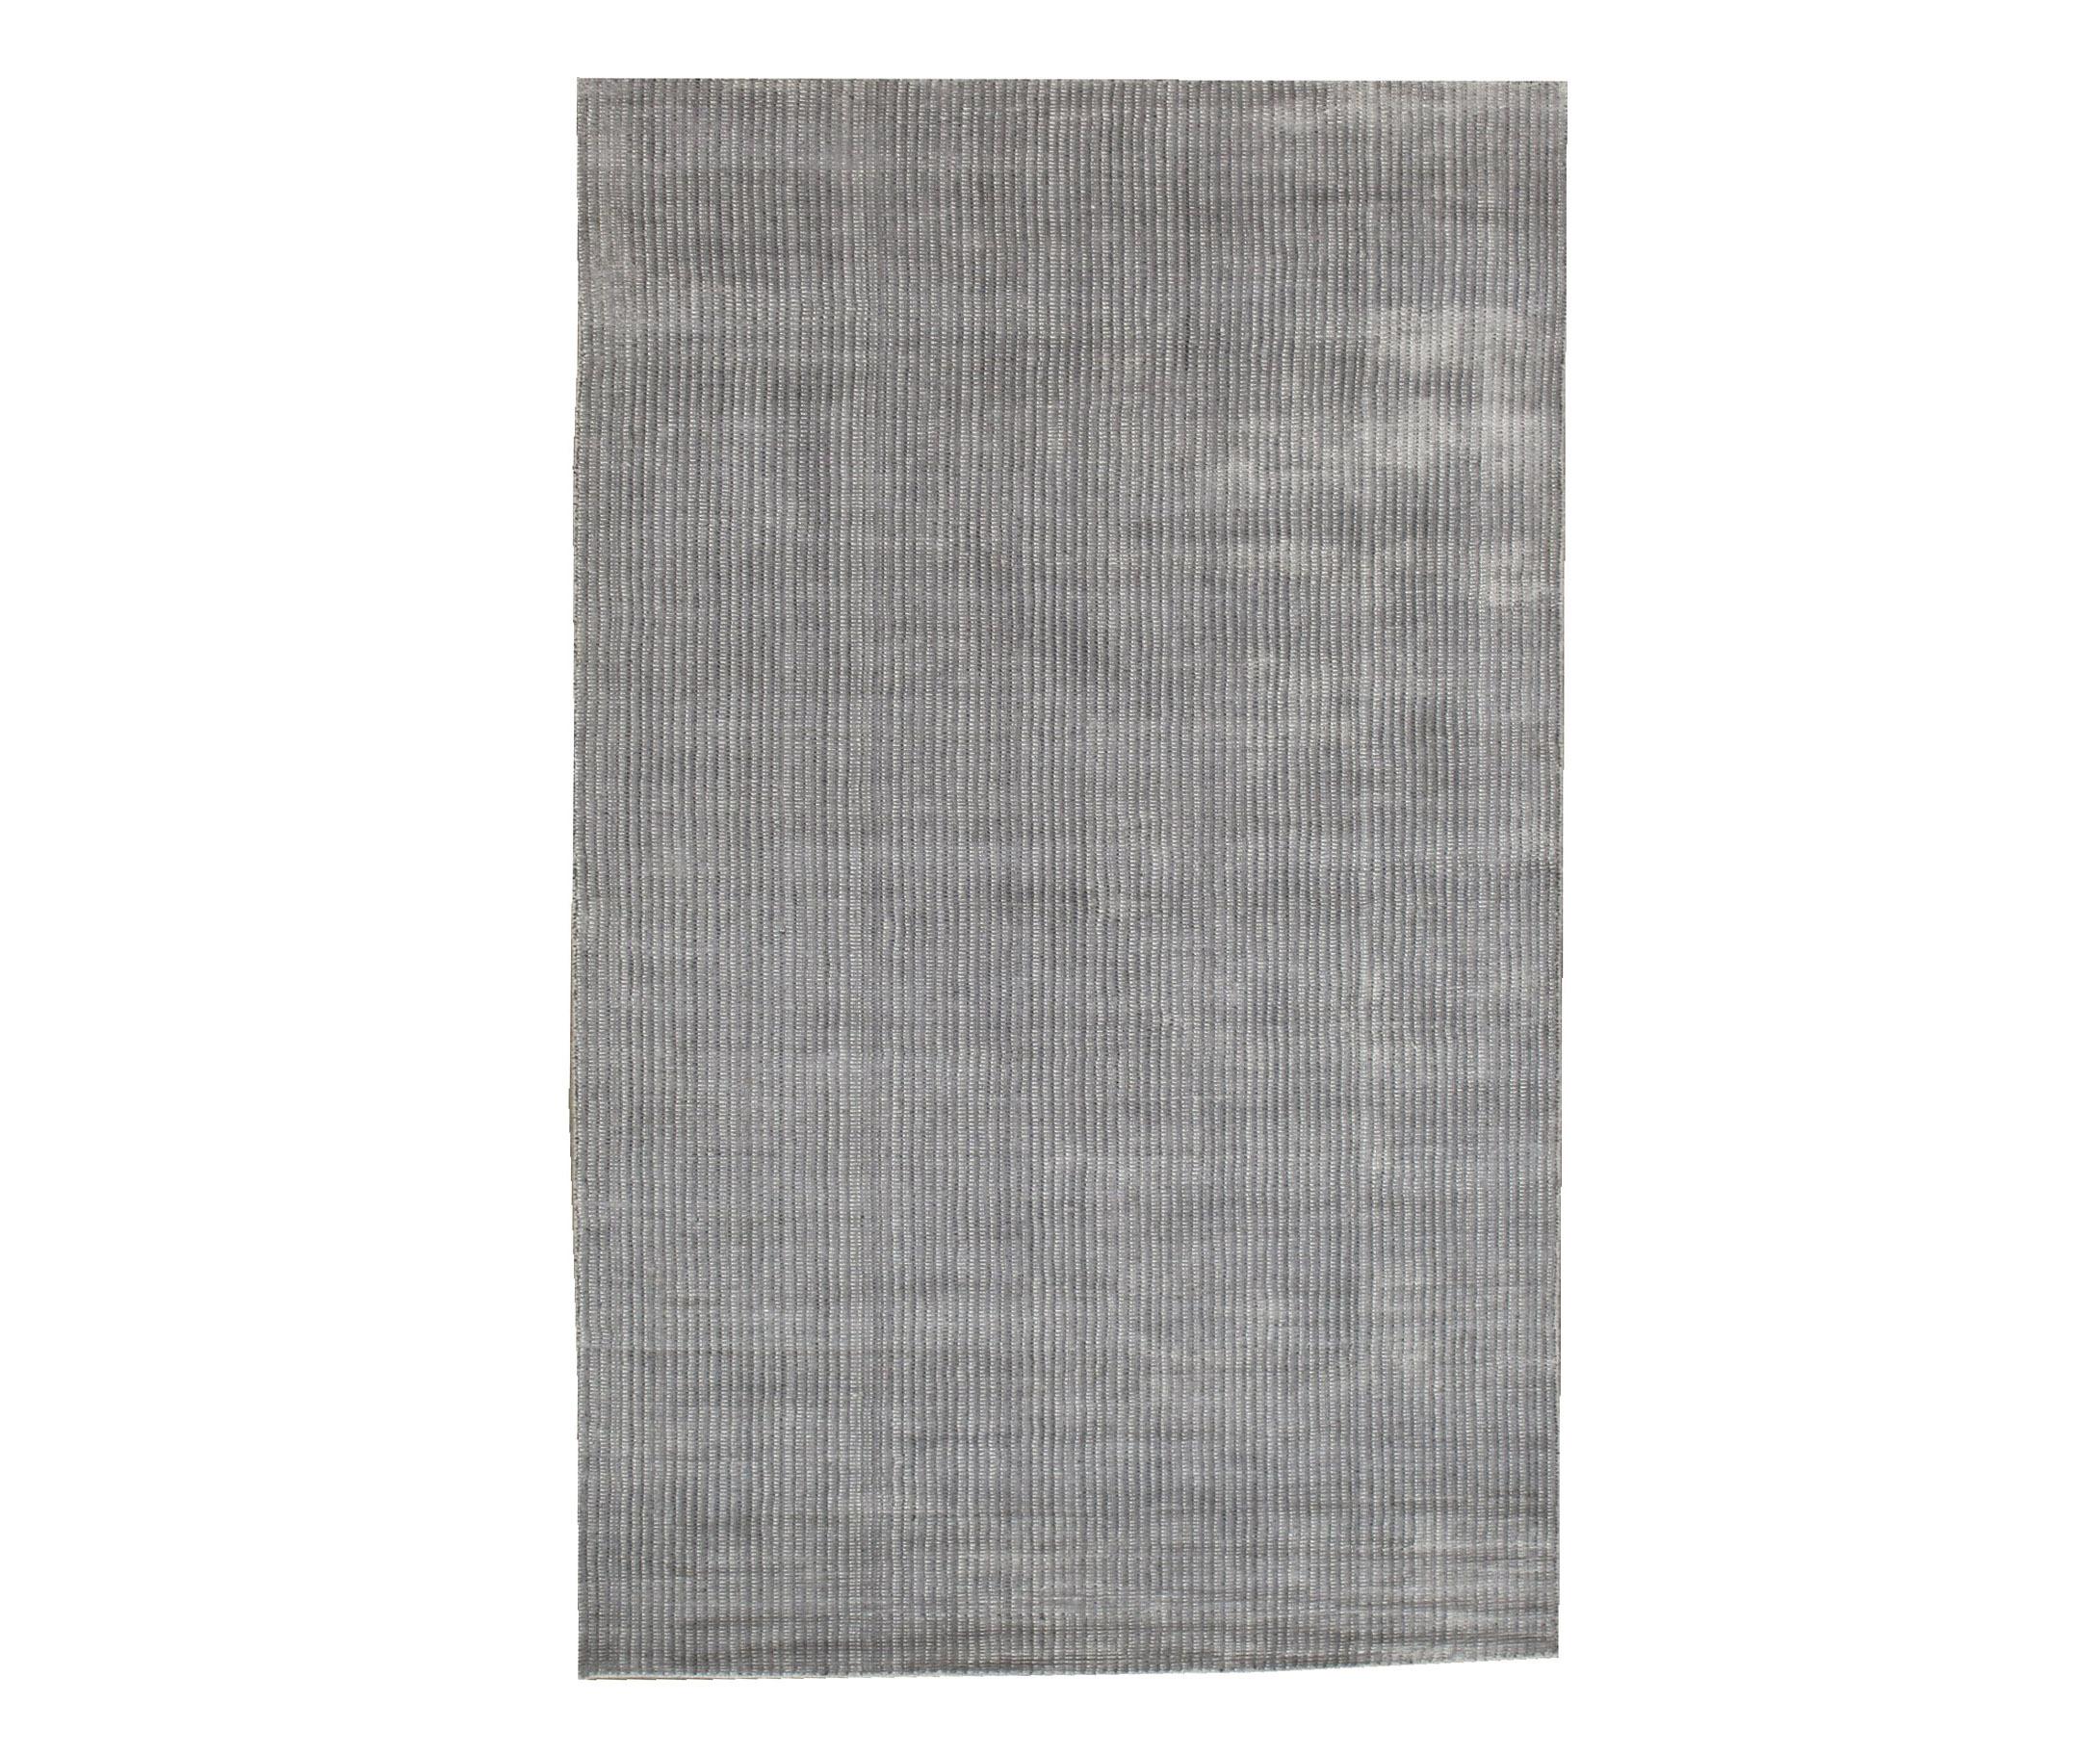 Handmade silk pile on a cotton foundation.

Dimensions: 5' x 8'. 

Origin: India

Field Color: Grey.